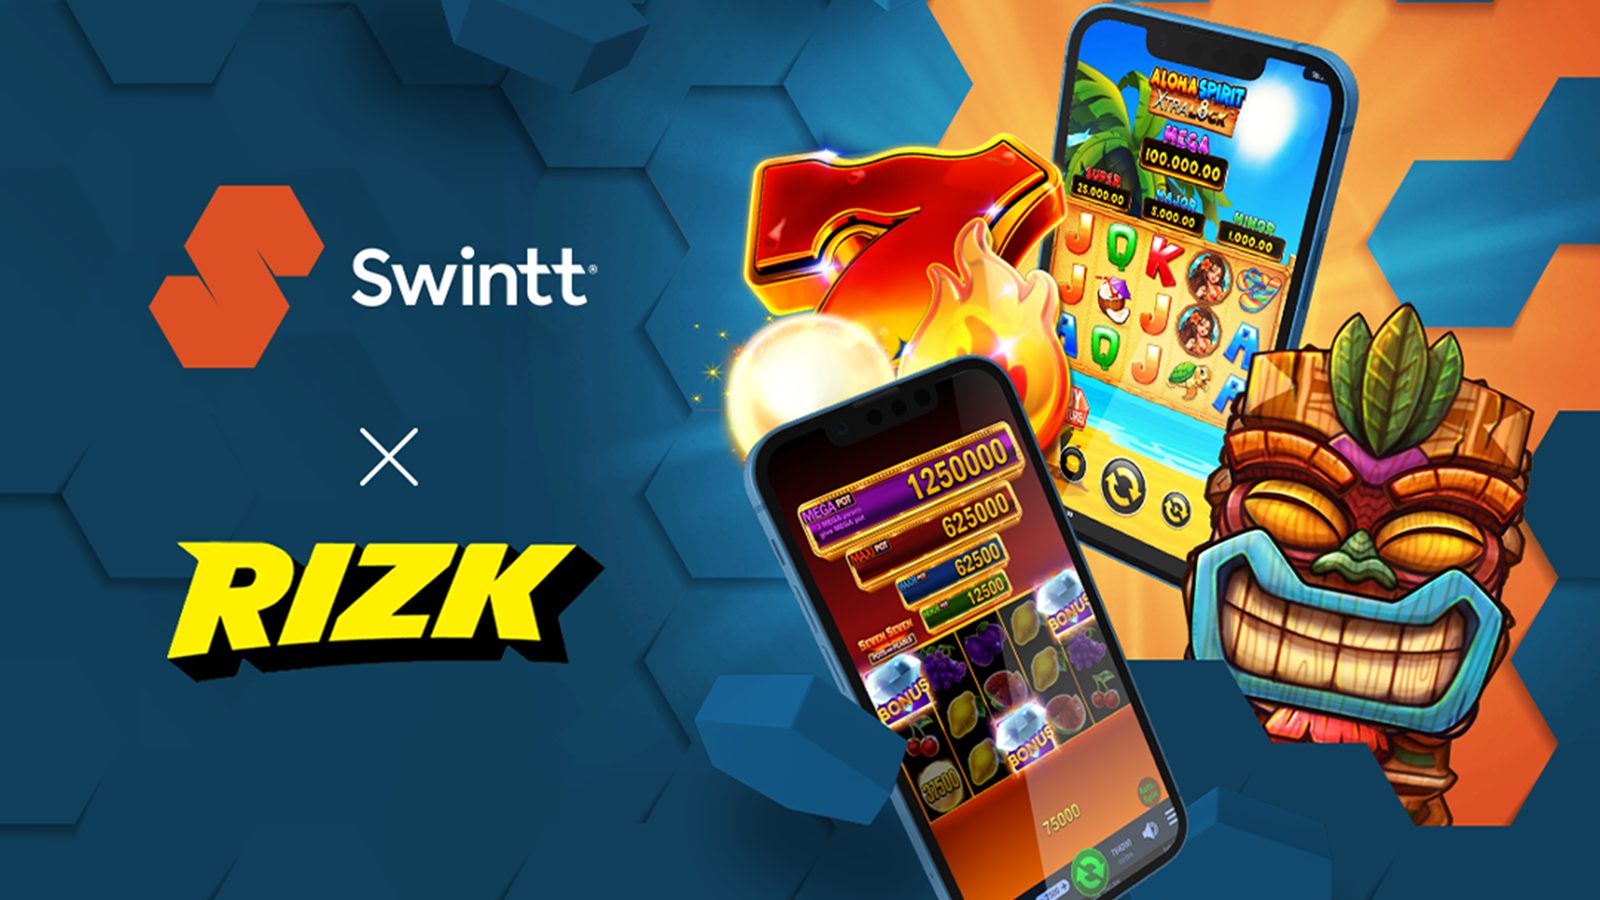 Swintt and Rizk Casino Collaboration